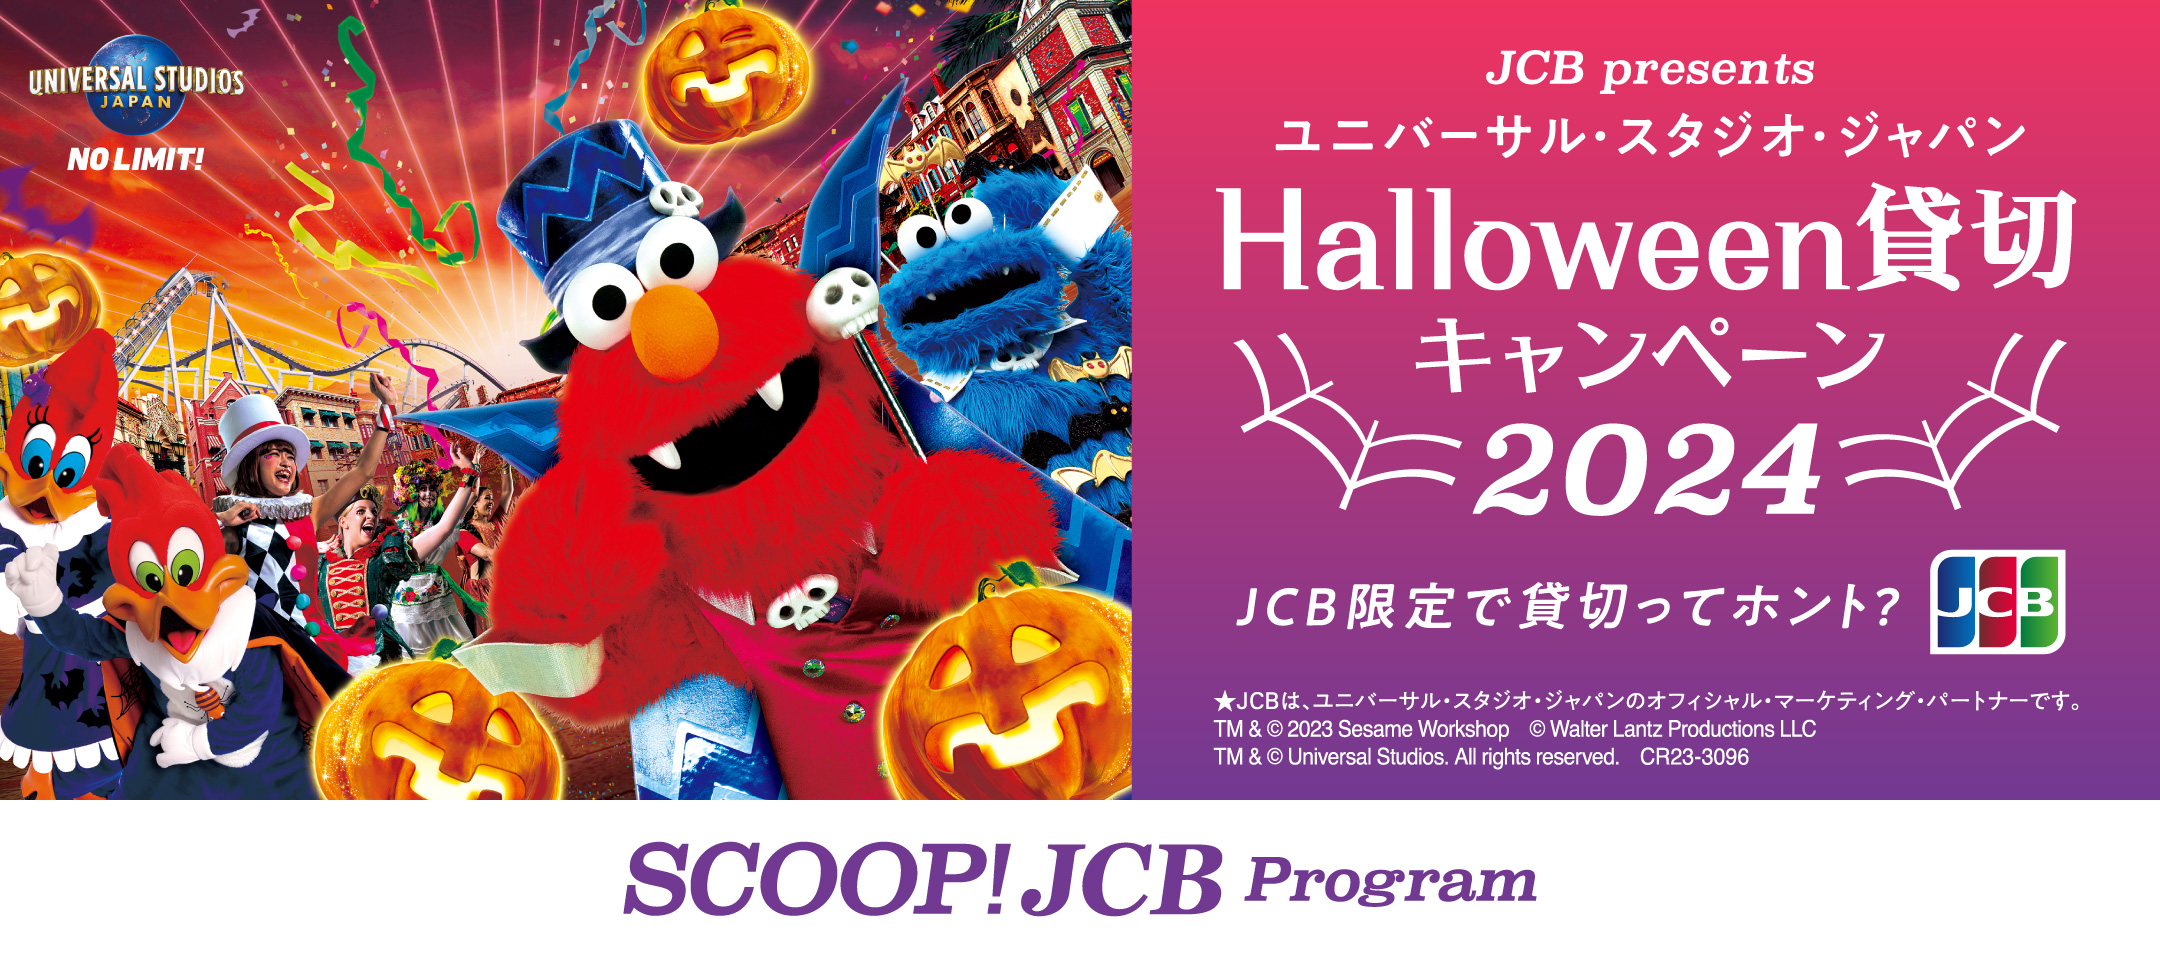 【JCB presents】ユニバーサル･スタジオ･ジャパン ハロウィーン貸切キャンペーン 2024